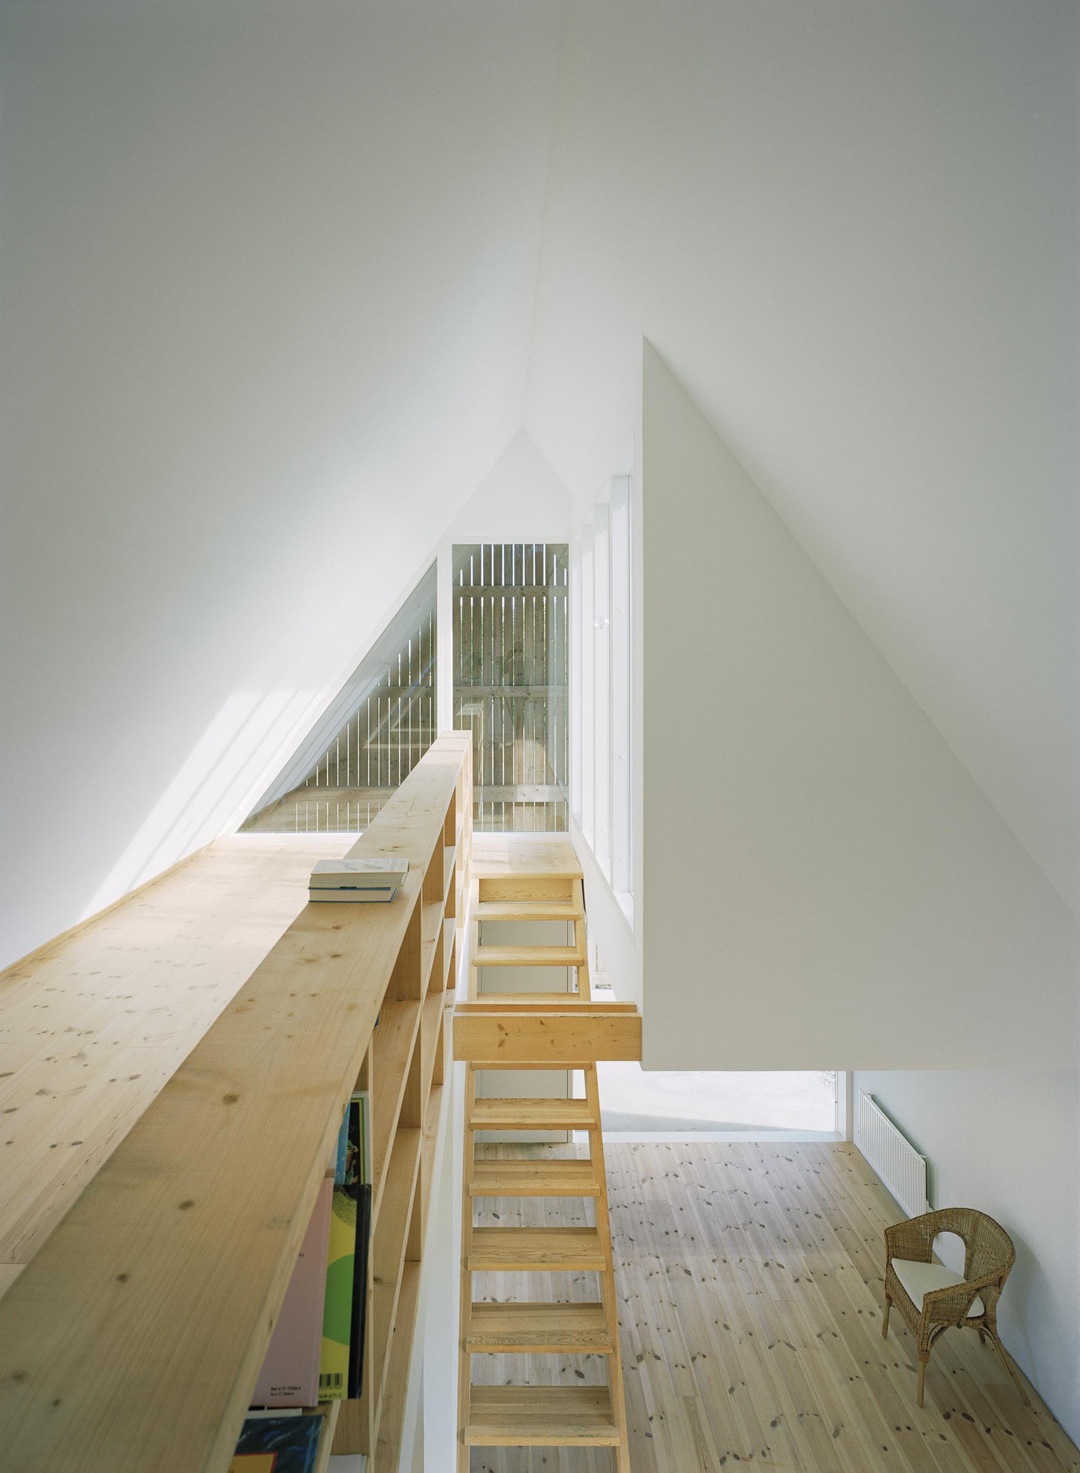 Sommarhus / LLP Architects